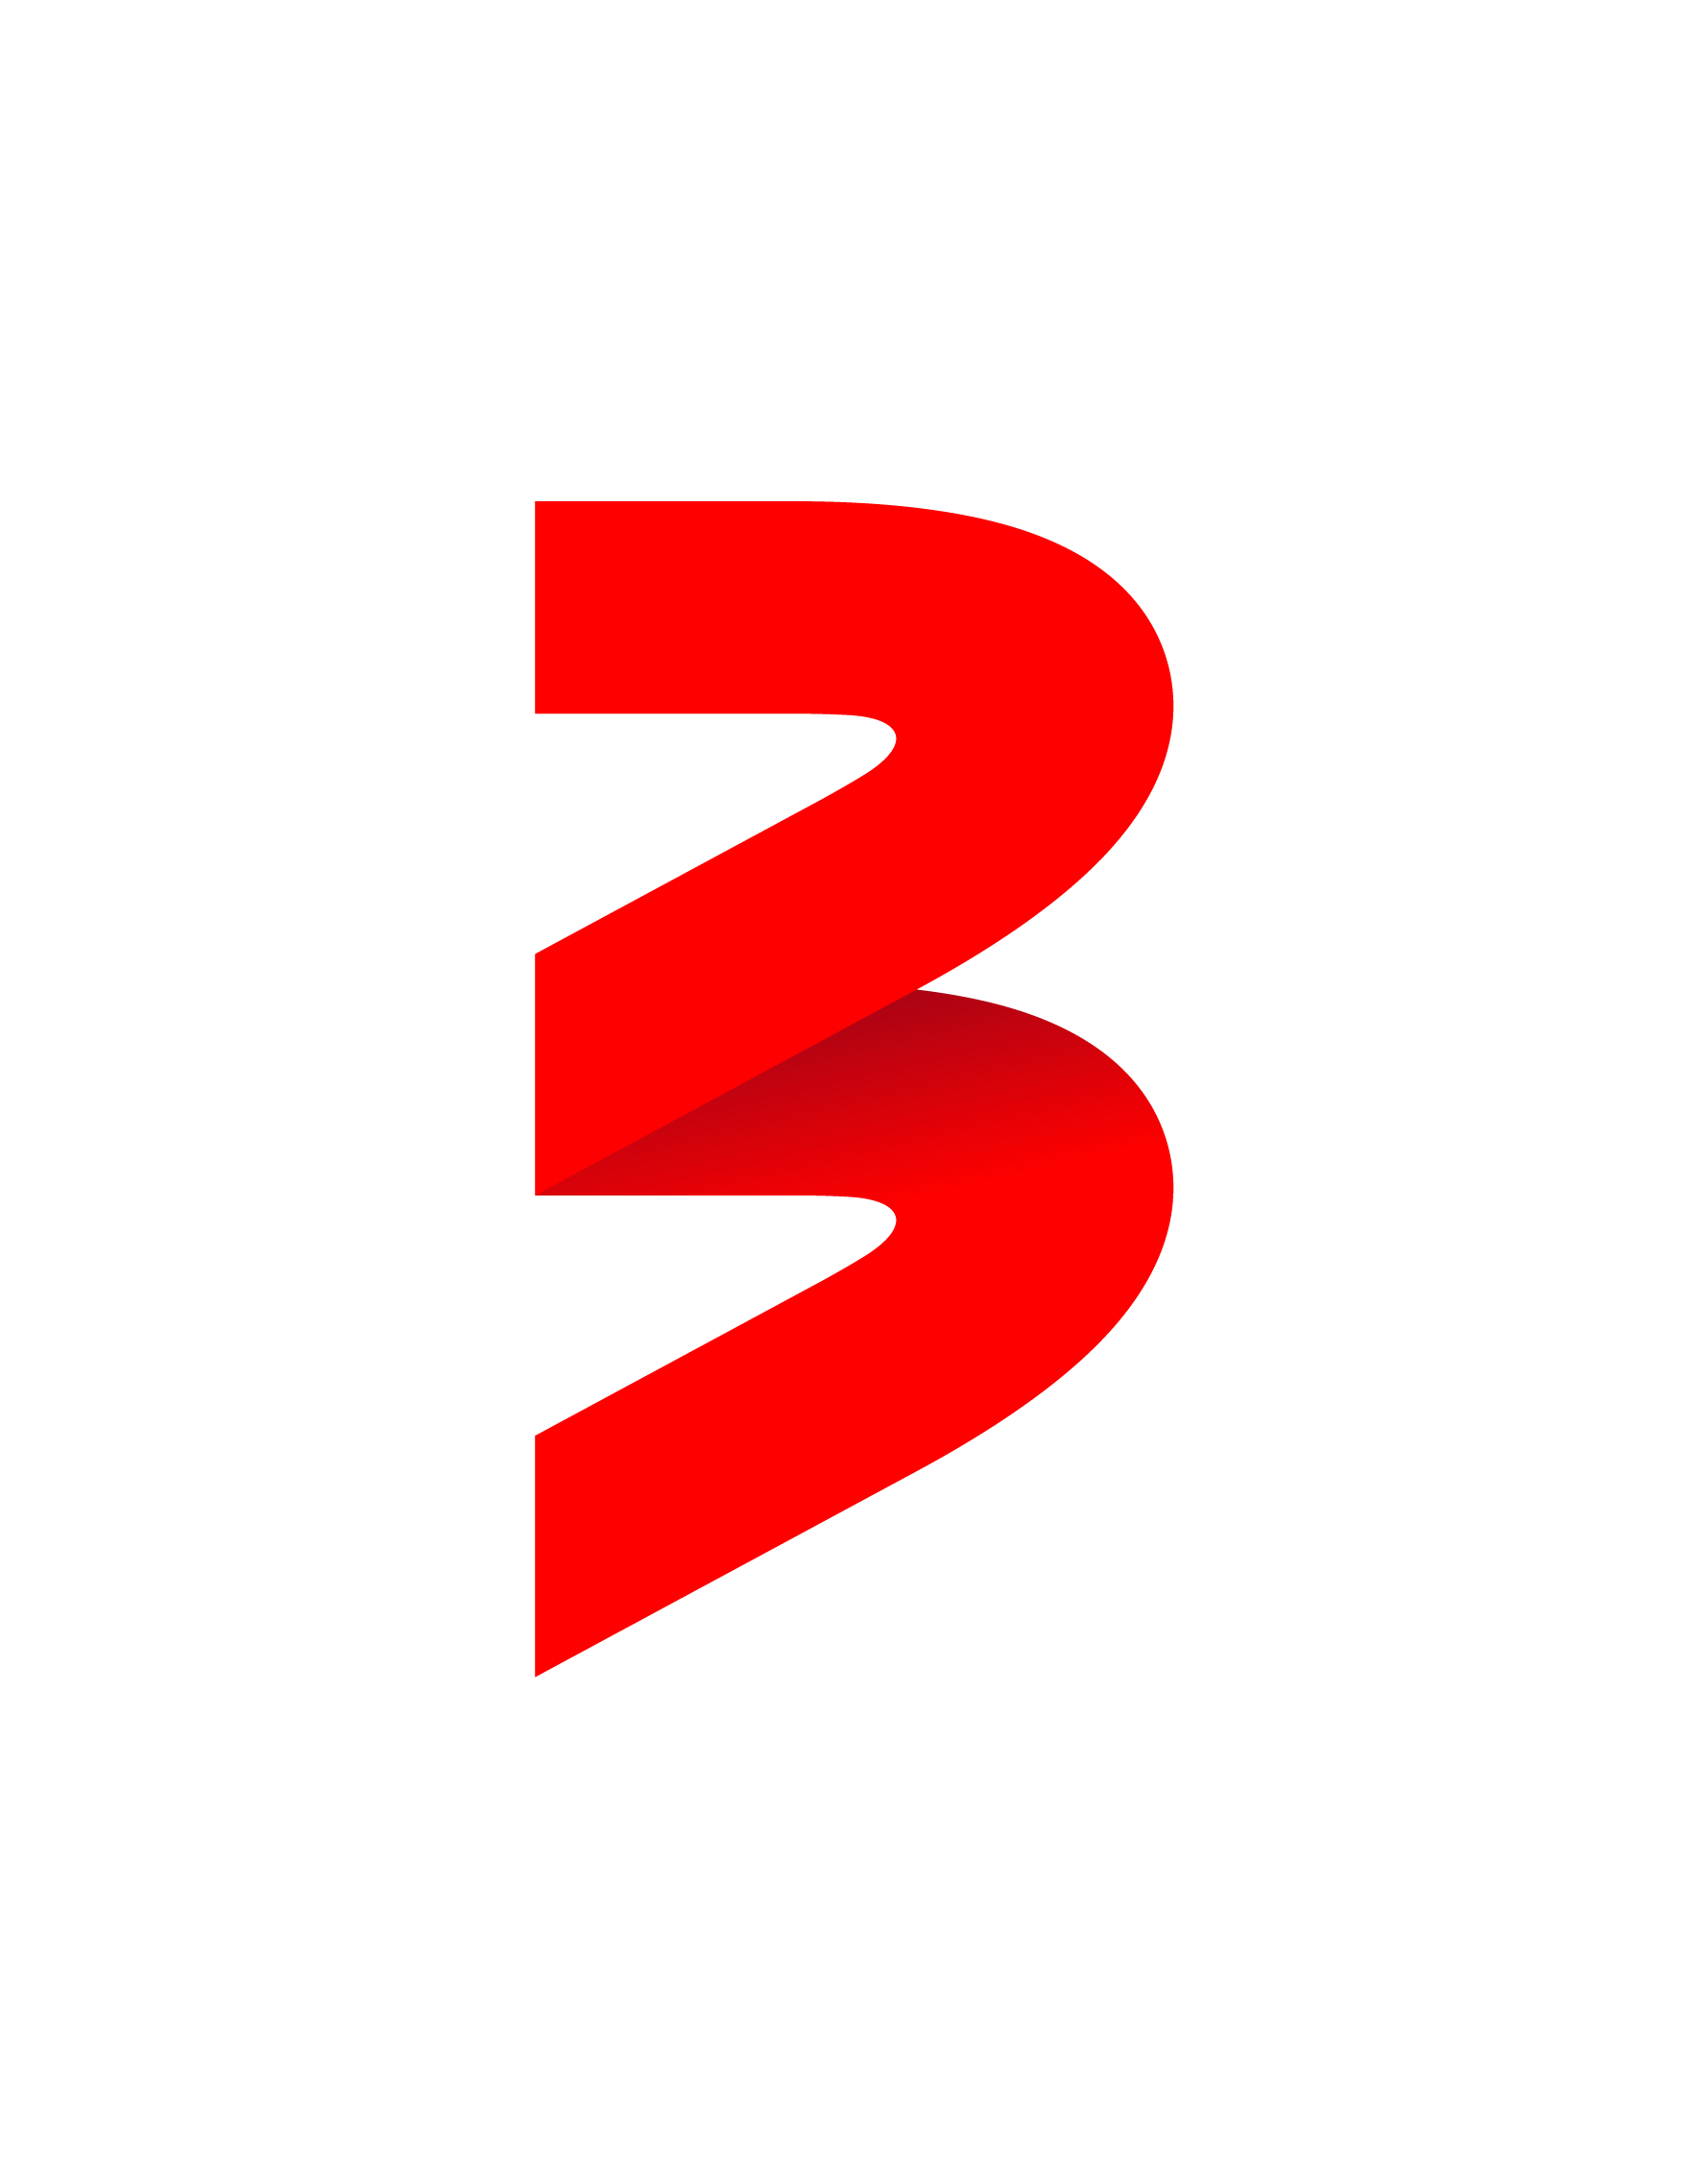 tv3 logo